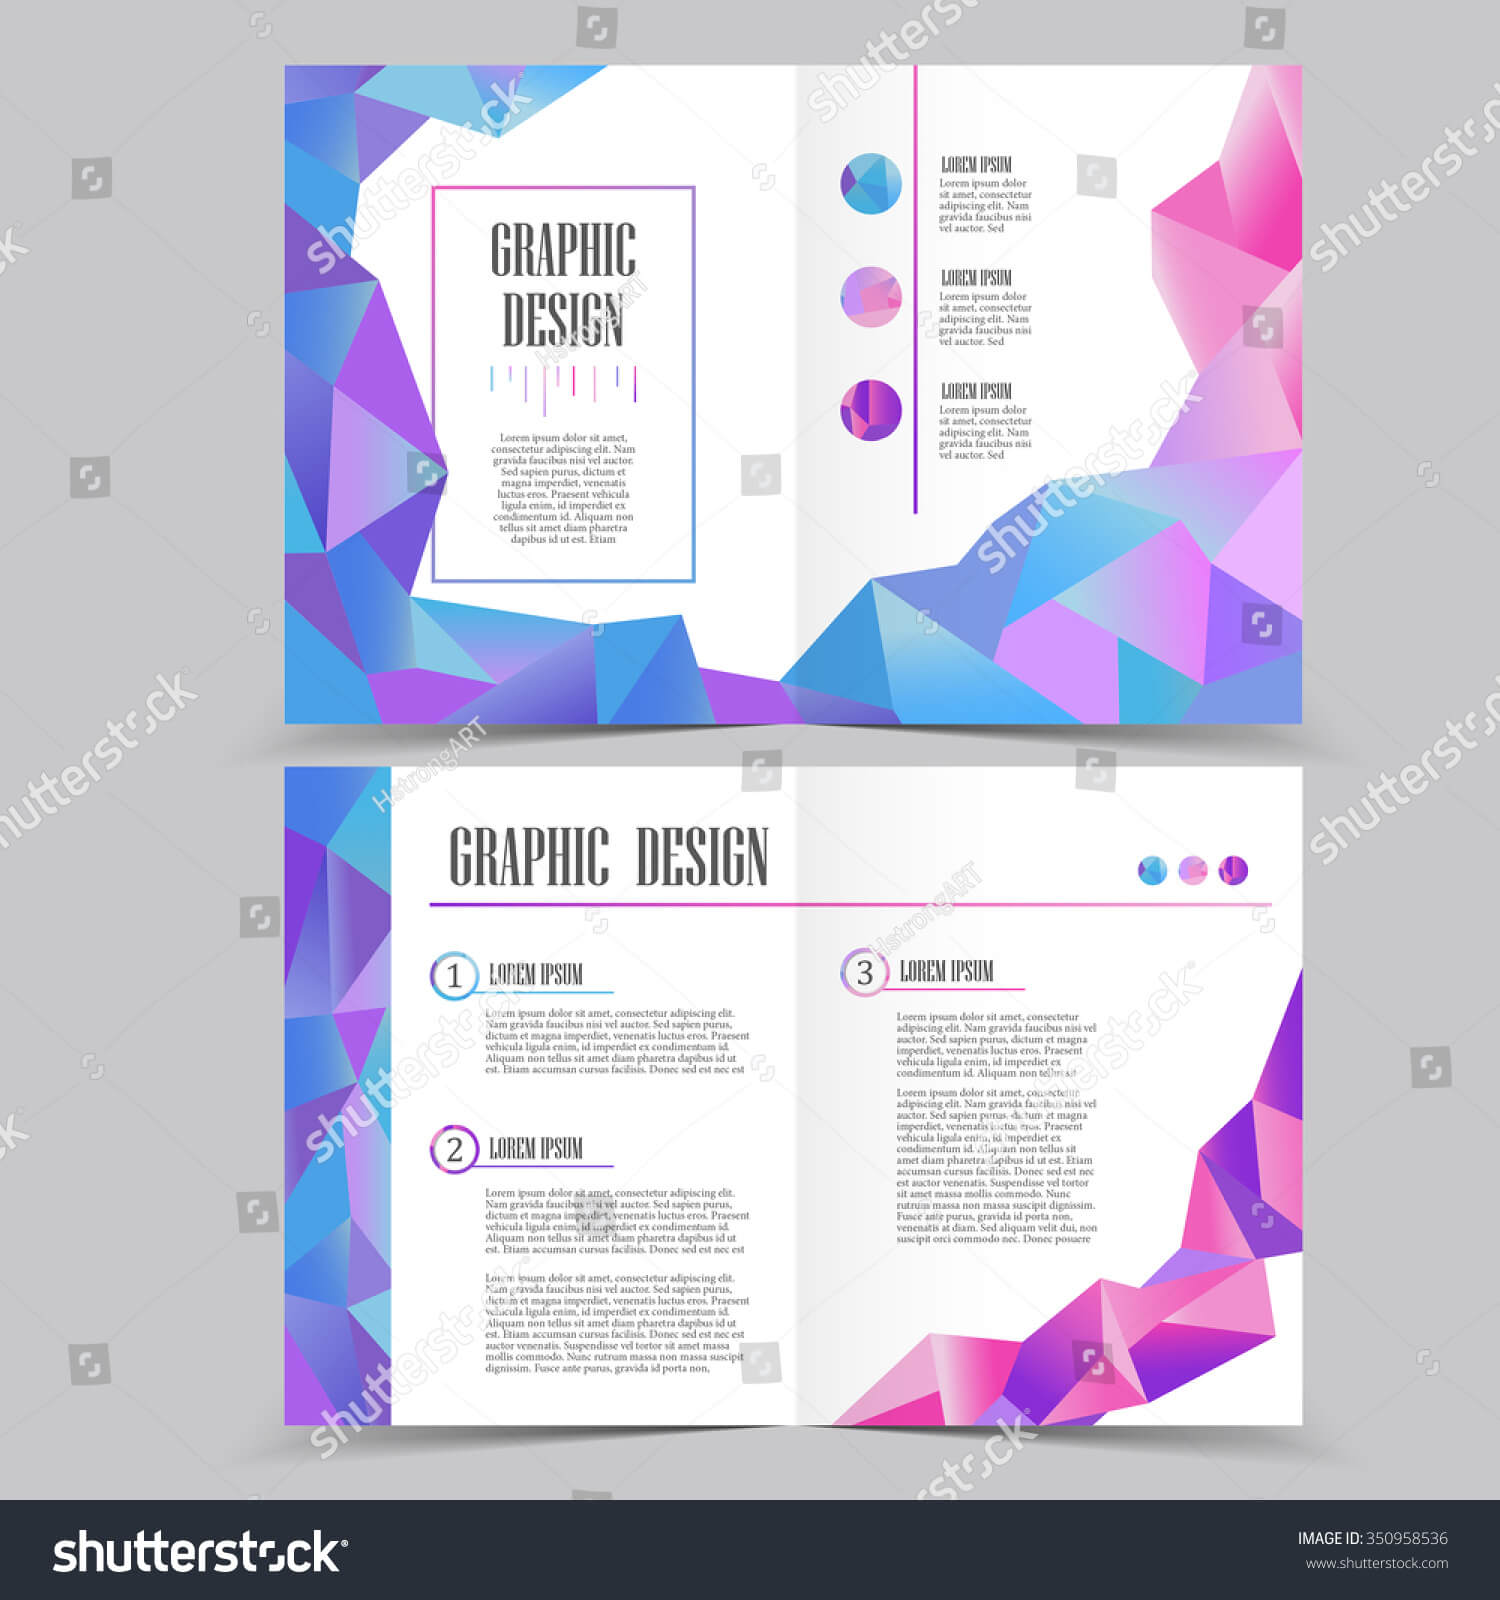 Beautiful Halffold Brochure Template Design Crystal Stock For Half Page Brochure Template